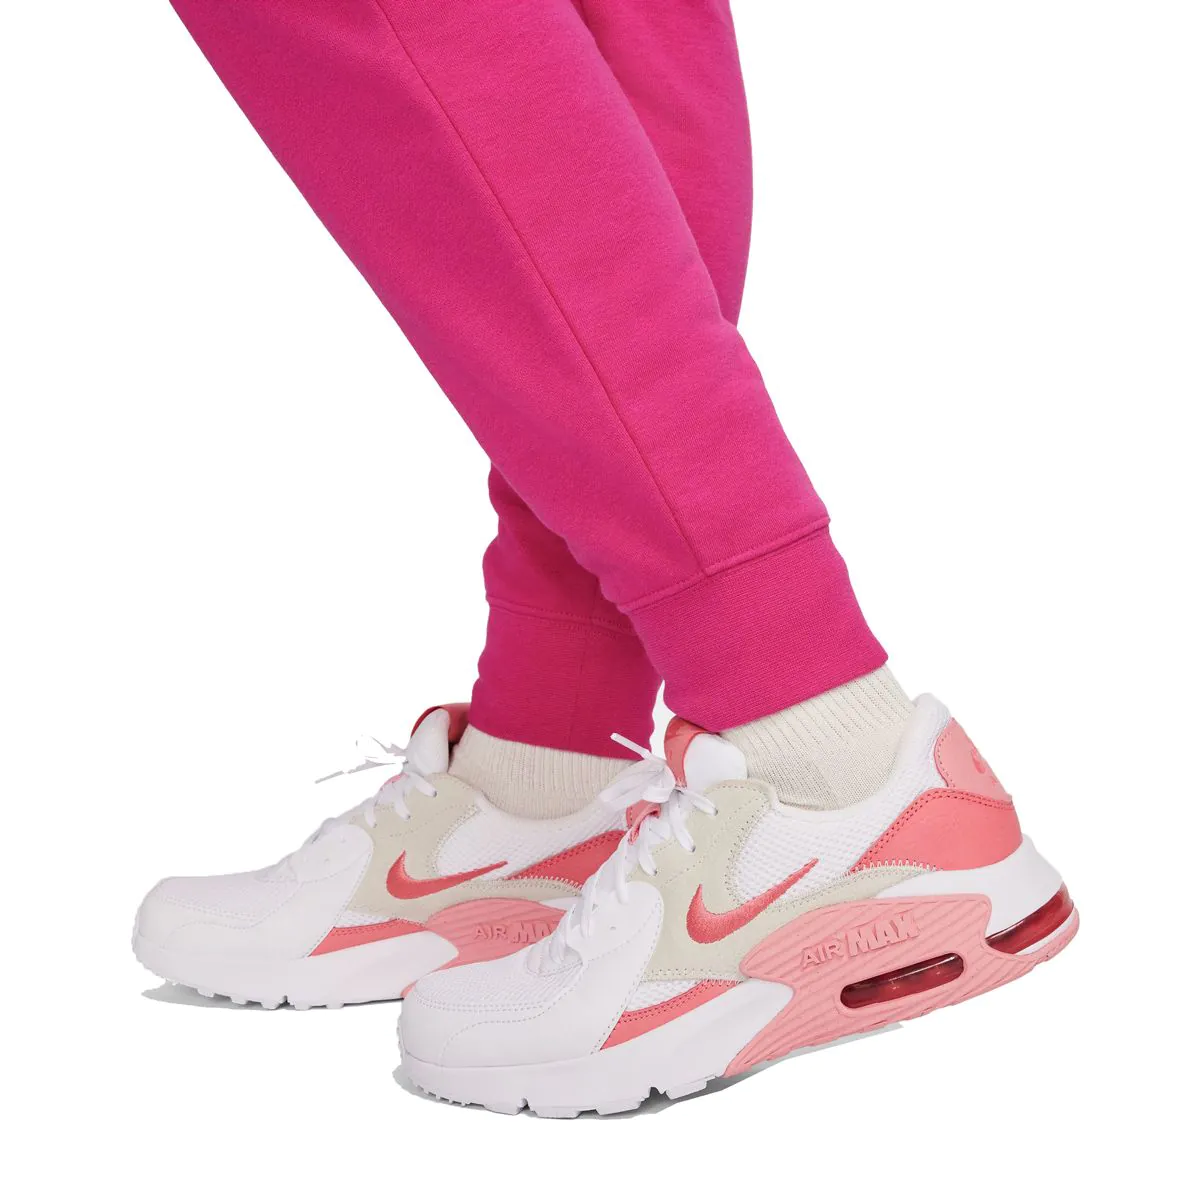 Nike Air Women's Mid-Rise Fleece Joggers